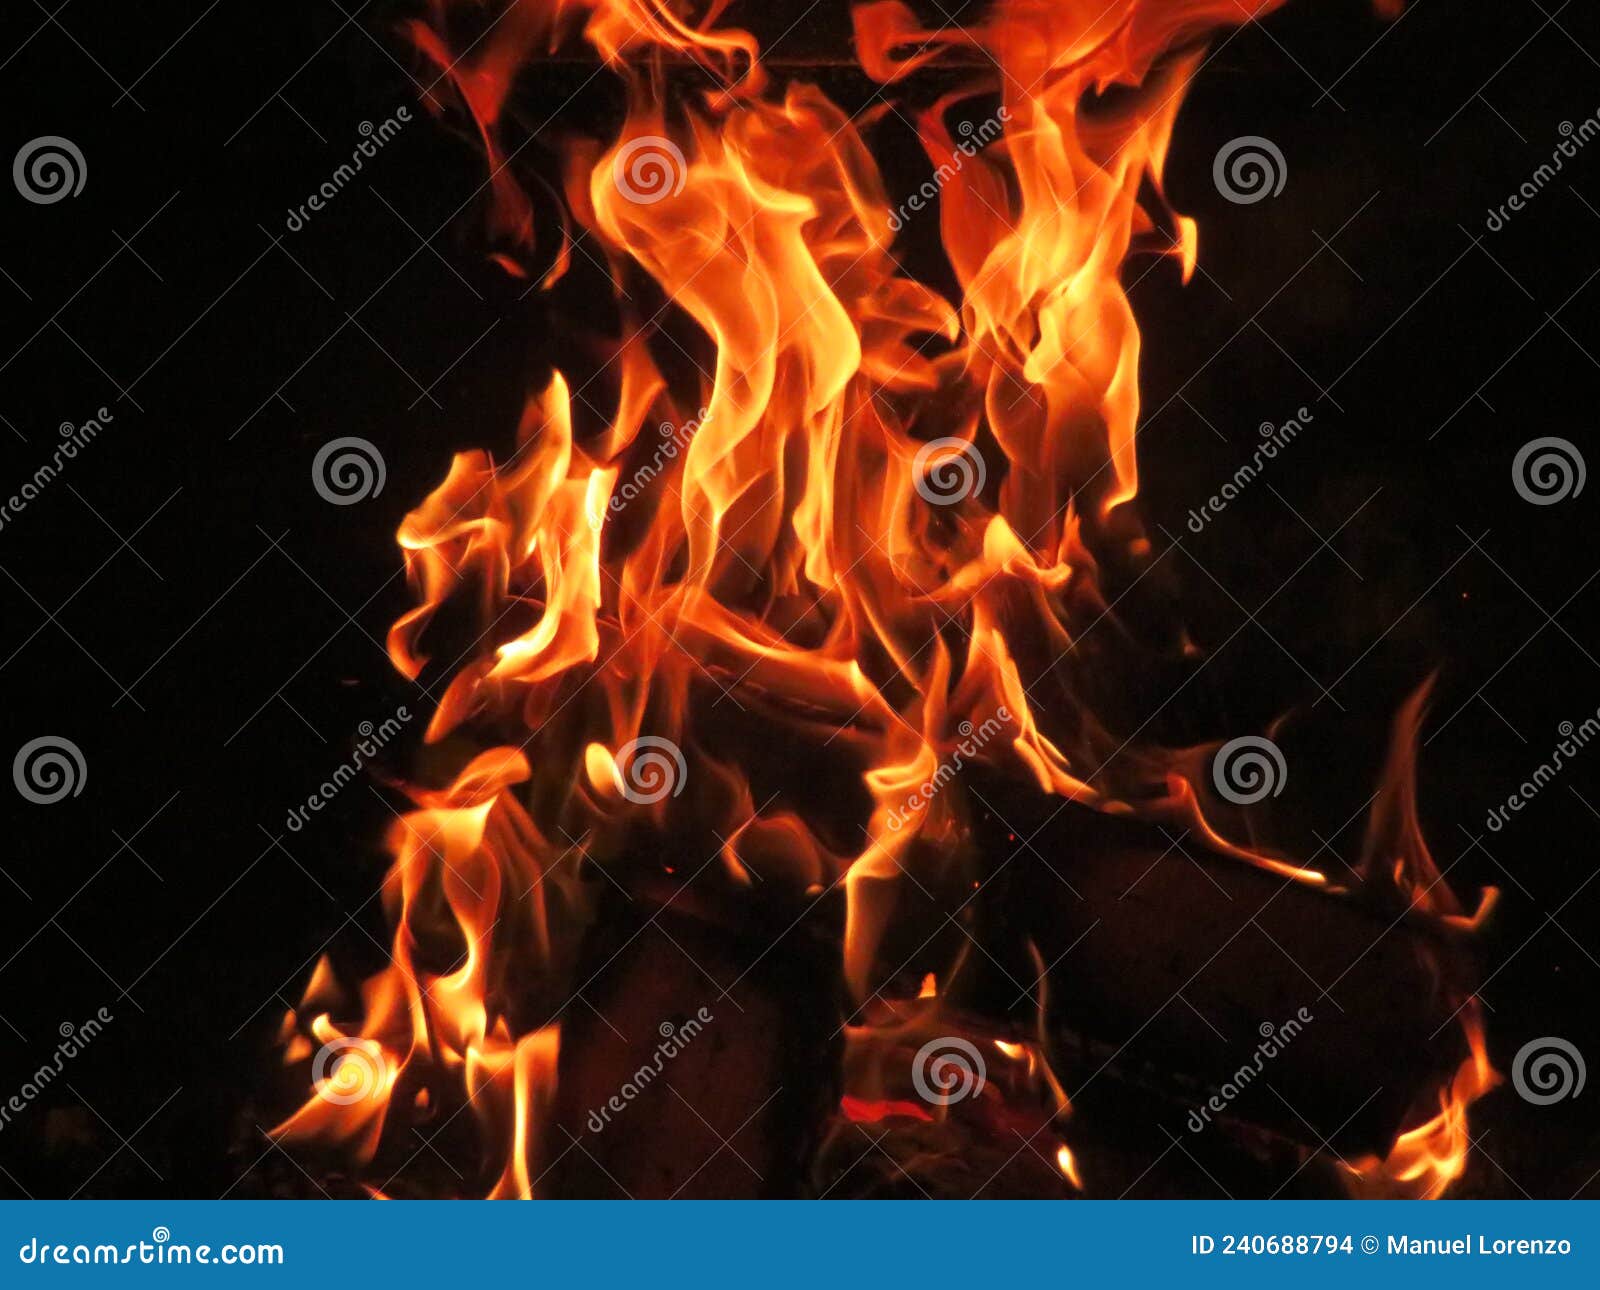 bonfire fire heat hot flame burn incandescent wood fireplace ash